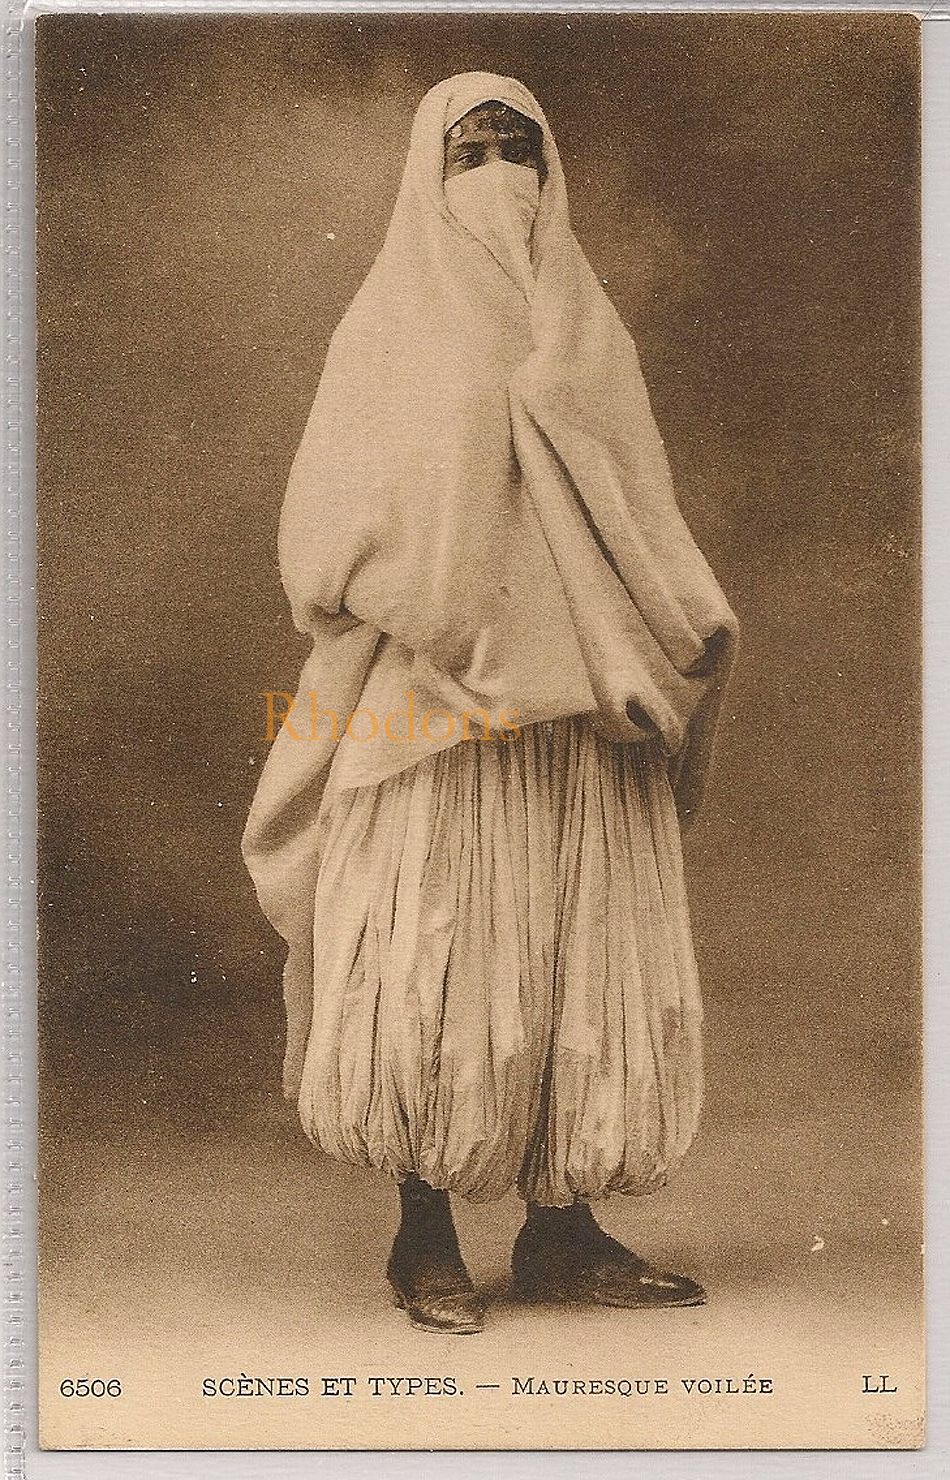 Algeria: Algerian Woman In Costume, Scénes et Types - Mauresque Voilée. Ear